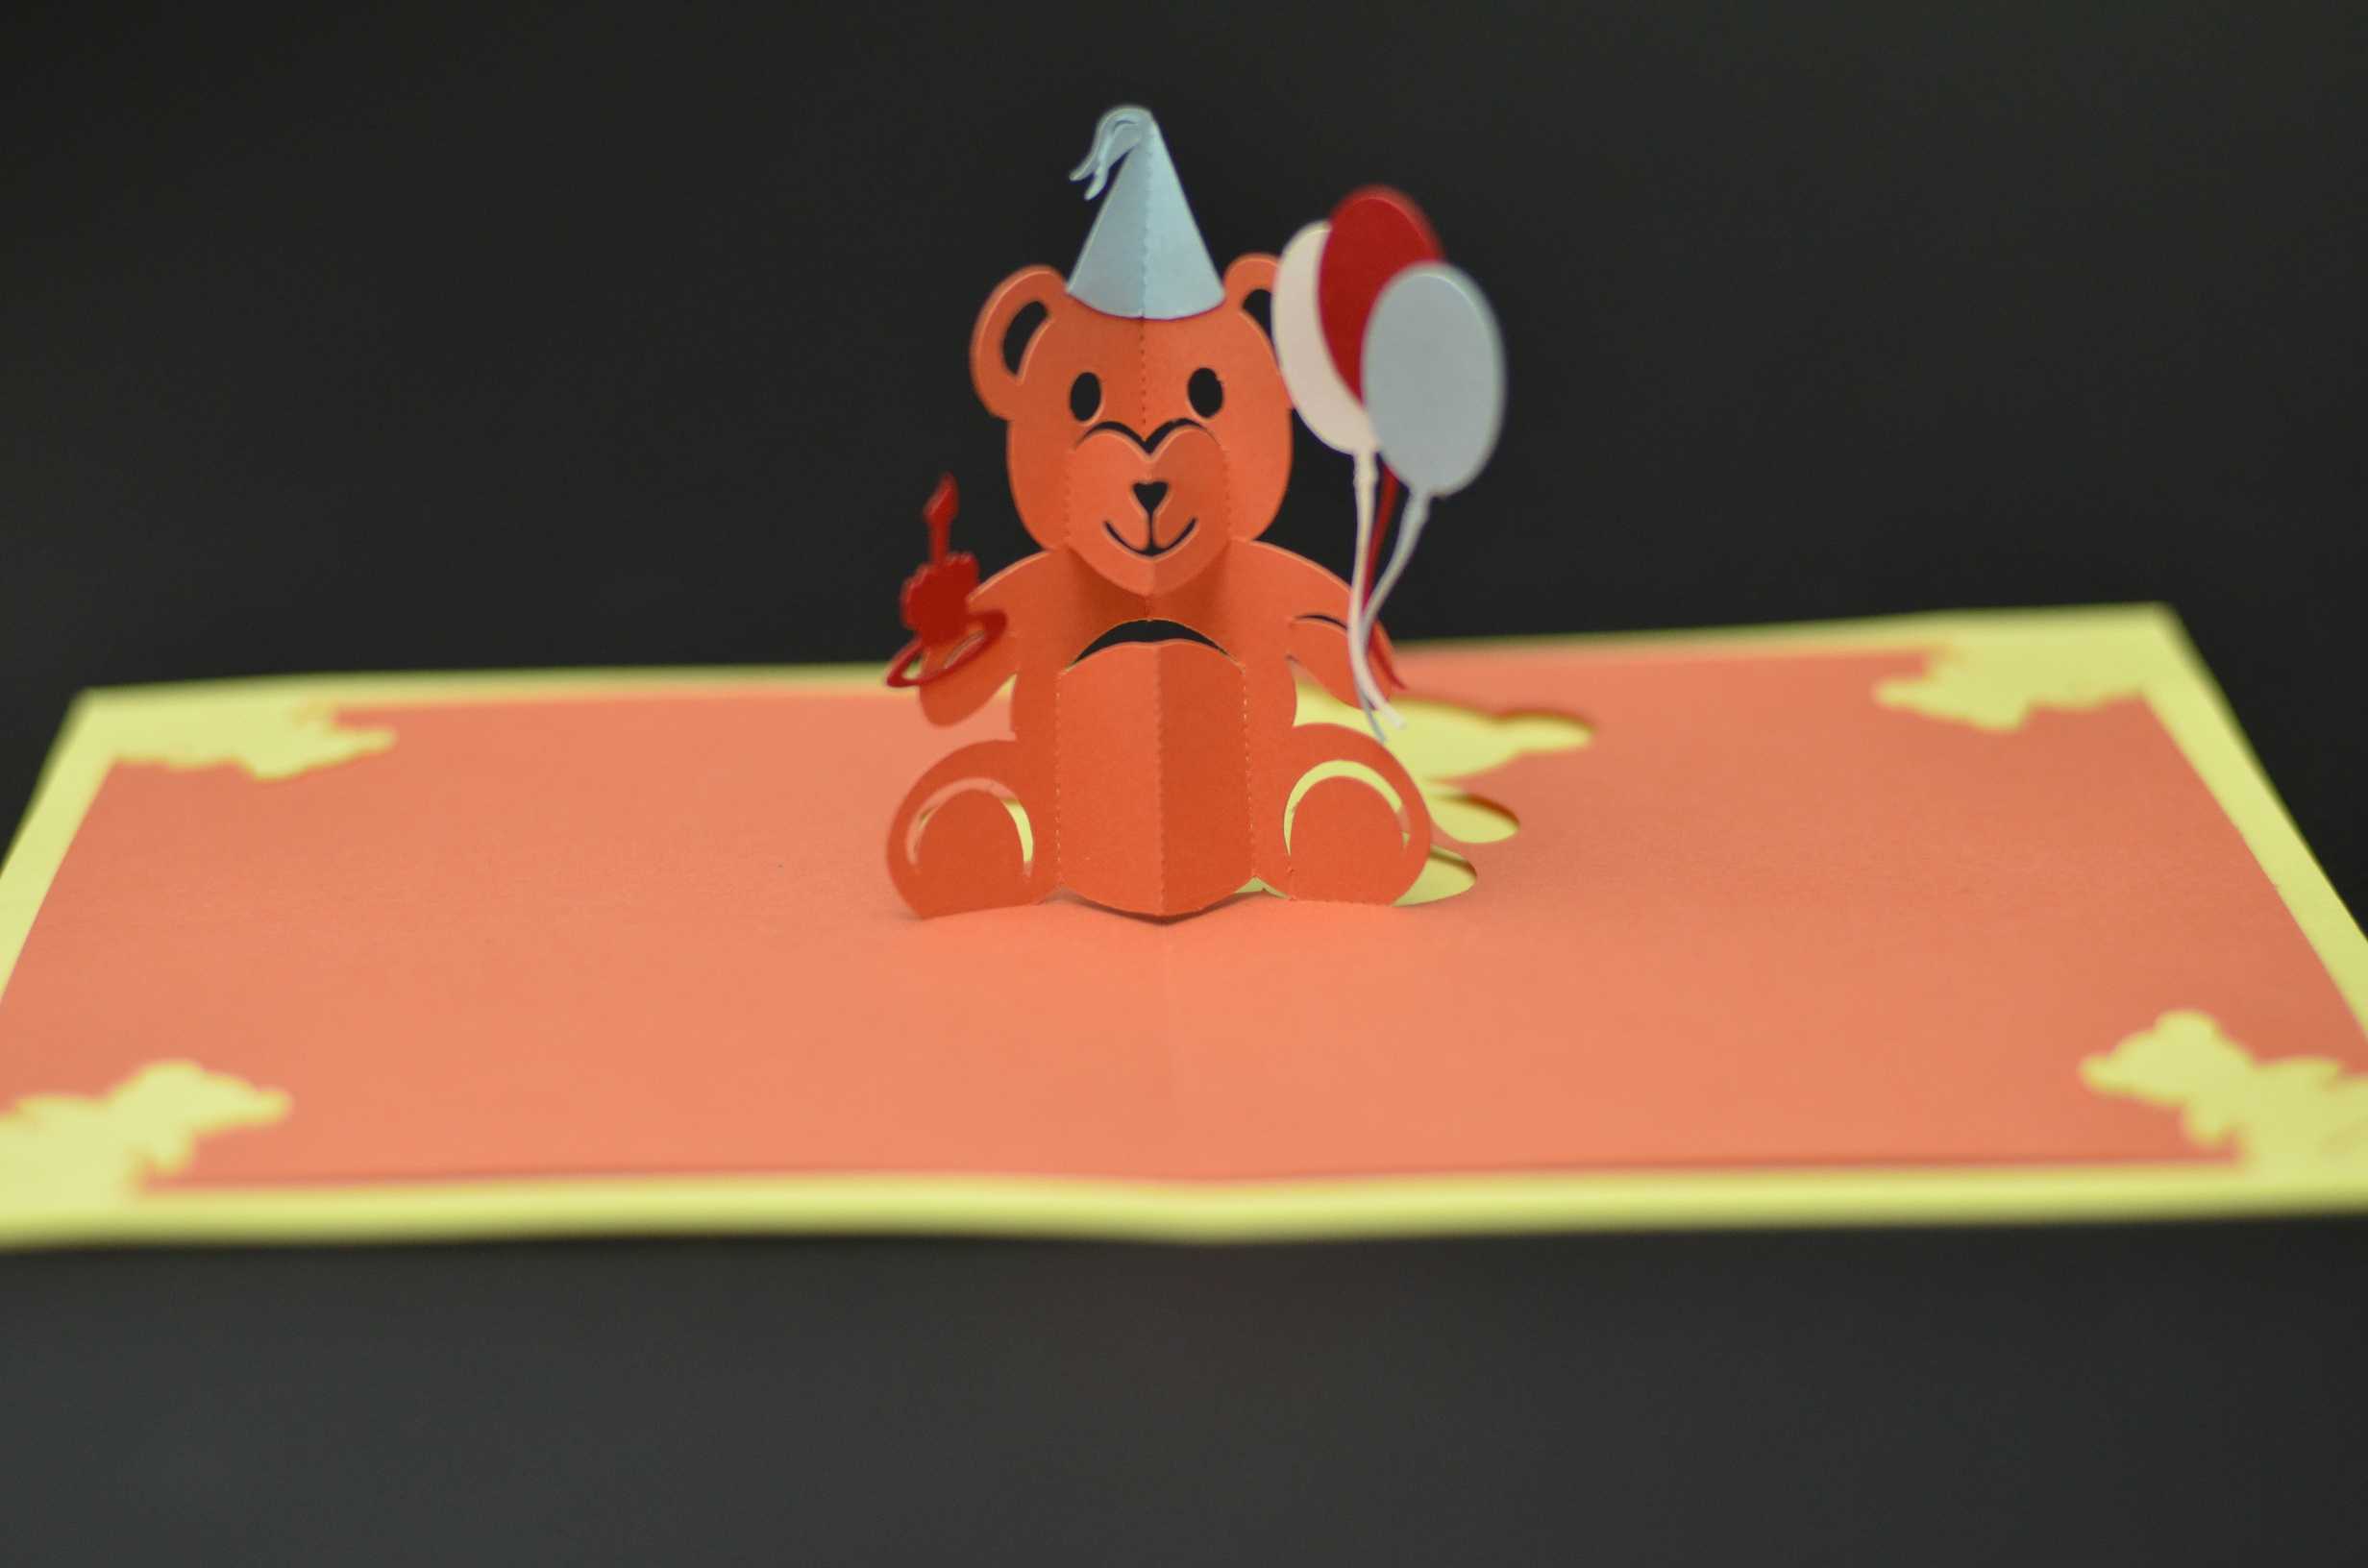 Teddy Bear Pop Up Card: Tutorial And Template – Creative Pop For Teddy Bear Pop Up Card Template Free